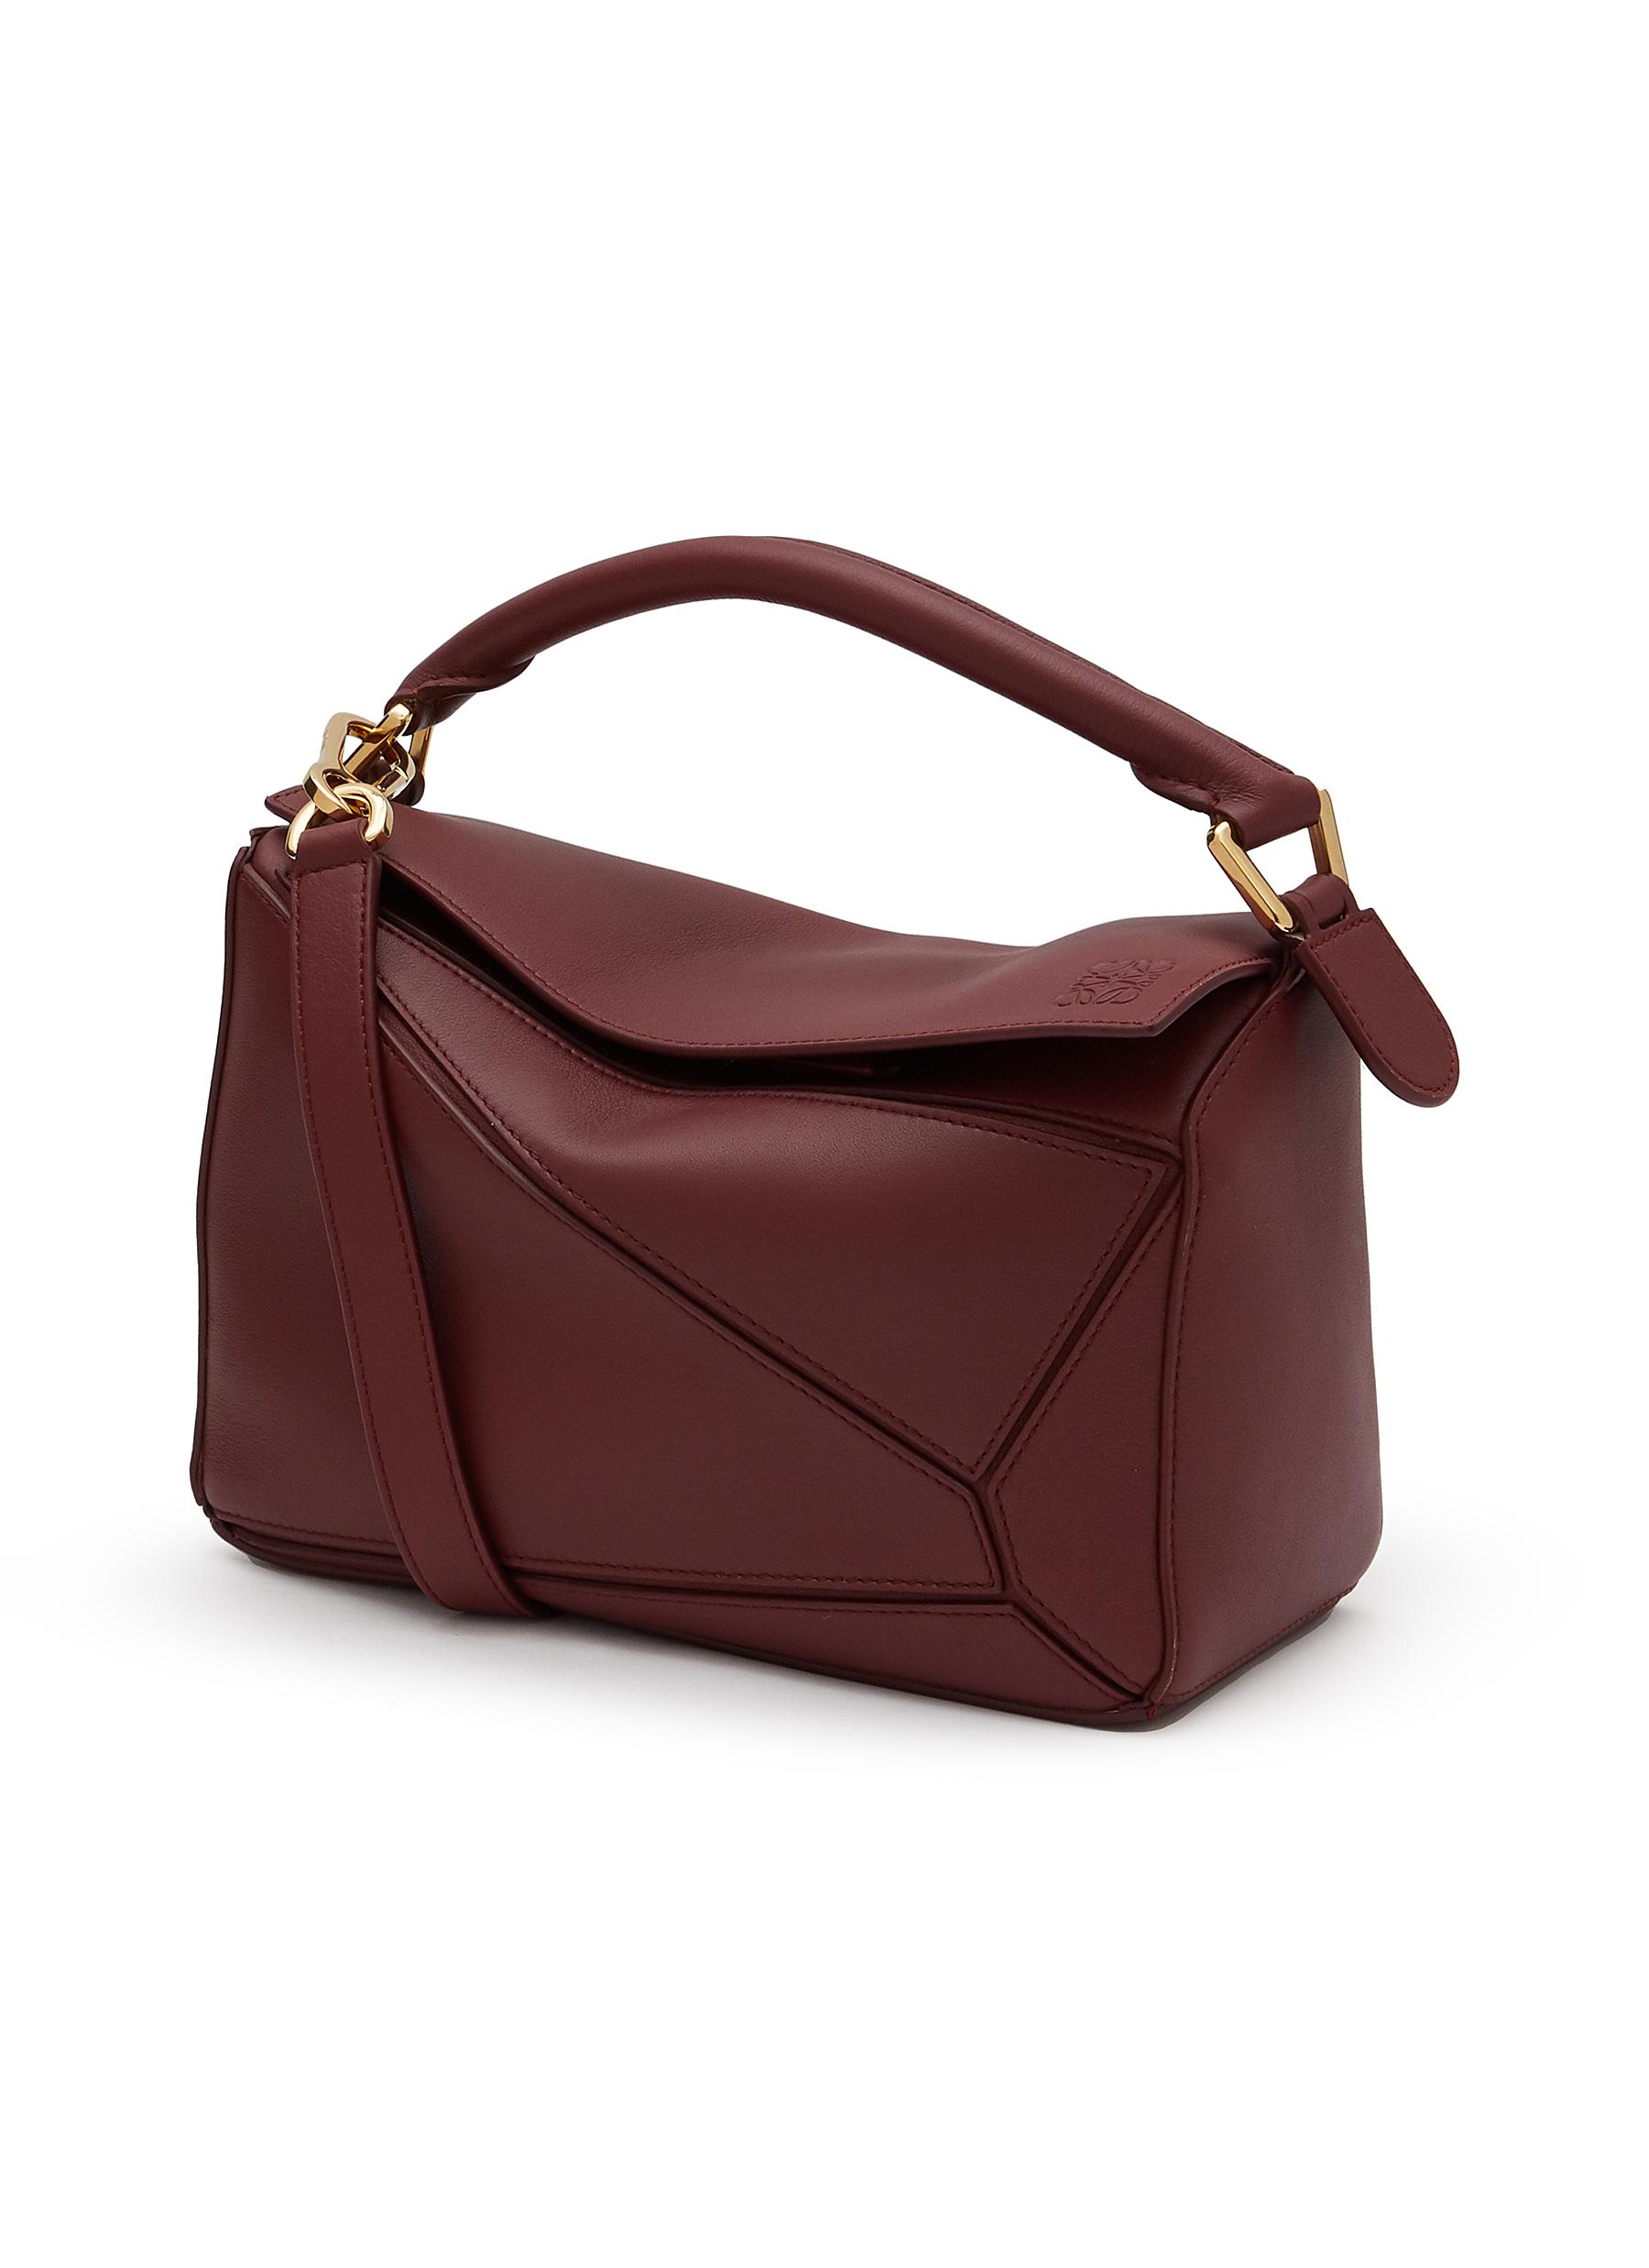 Amazon.com: Burgundy Croc-Embossed Italian Leather Tote Handbag : Handmade  Products